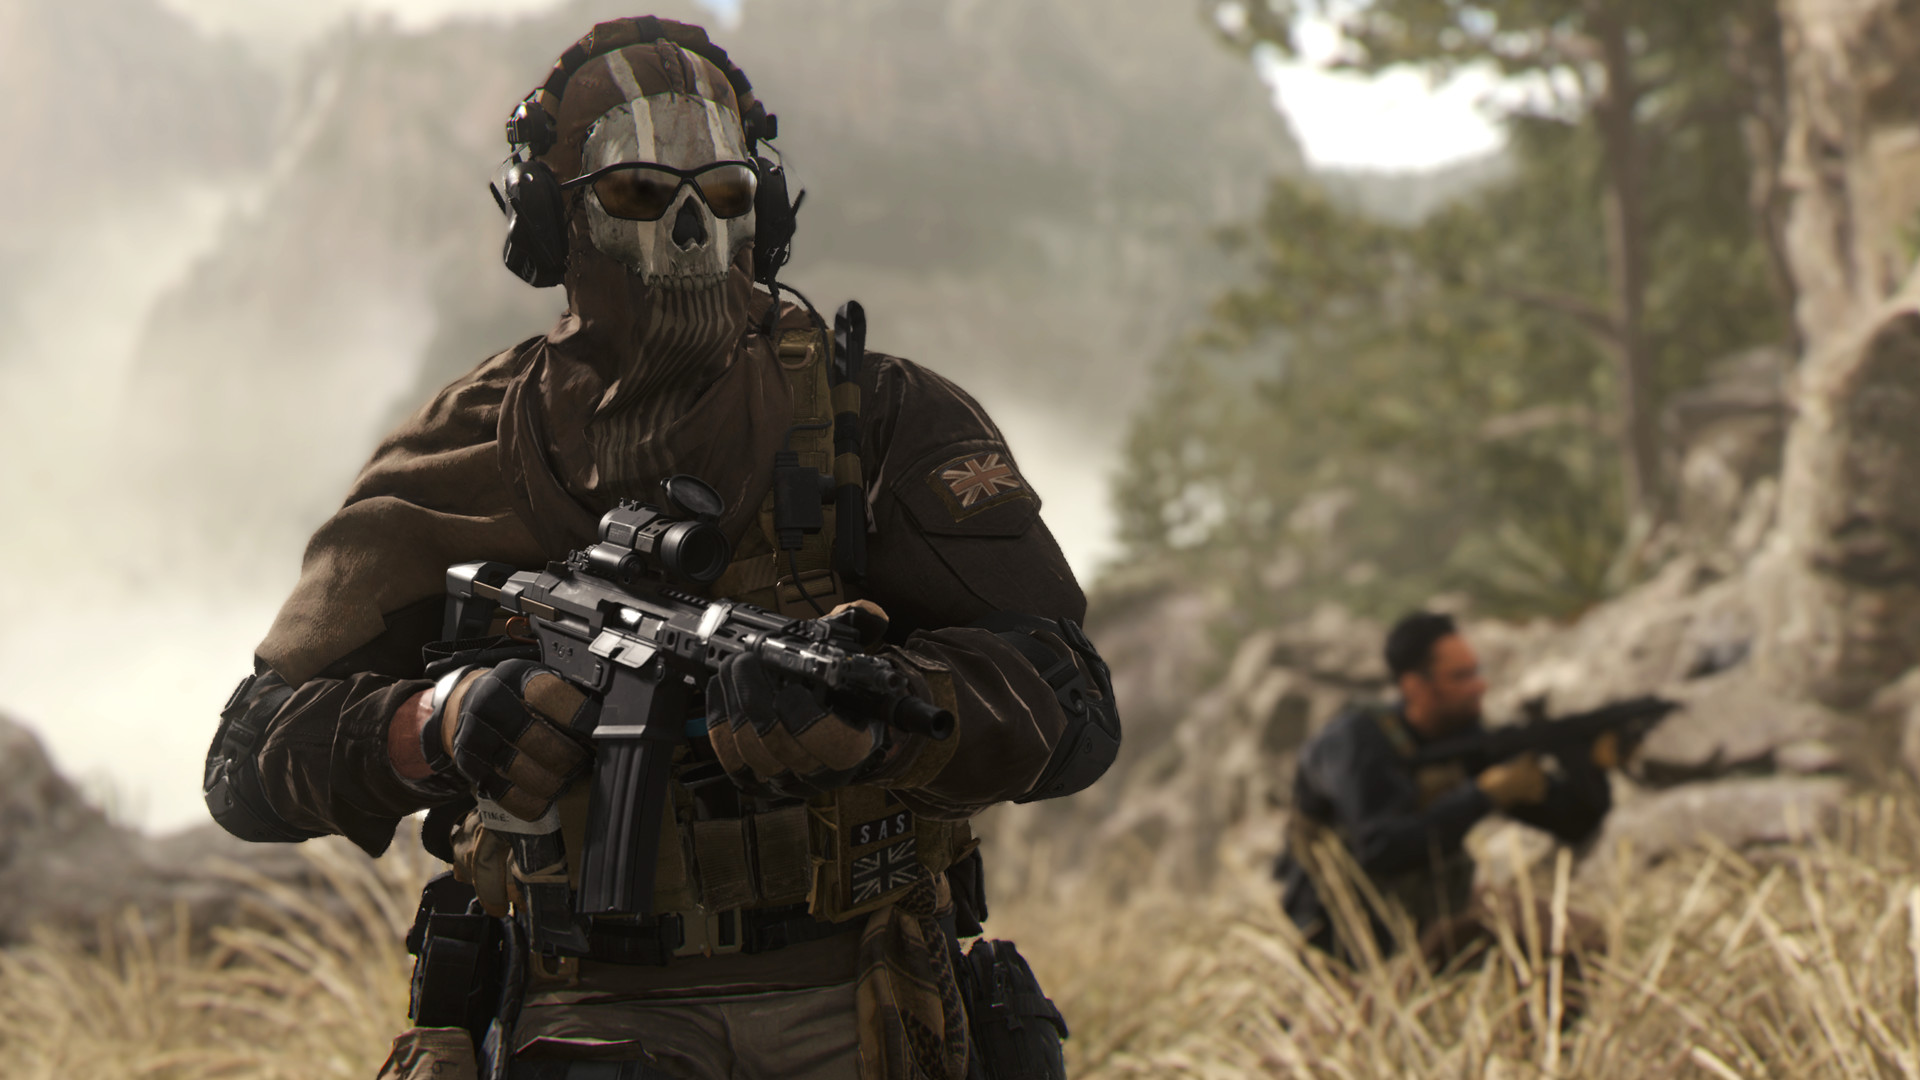 Primeira olhada em Call of Duty: Warzone Mobile